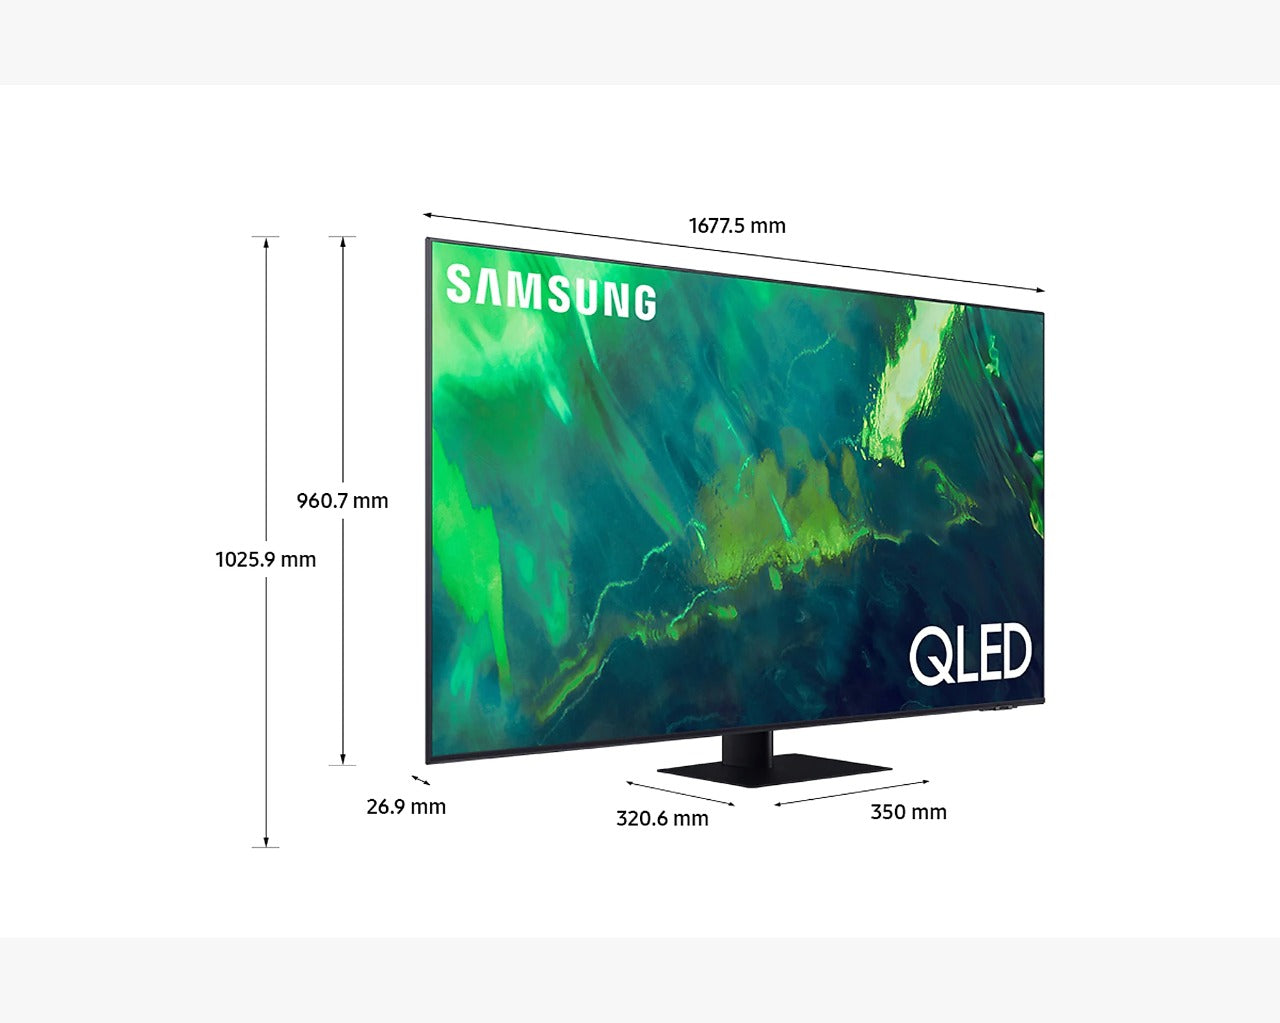 Samsung 1m 89cm (75") Q70A QLED 4K Smart TV